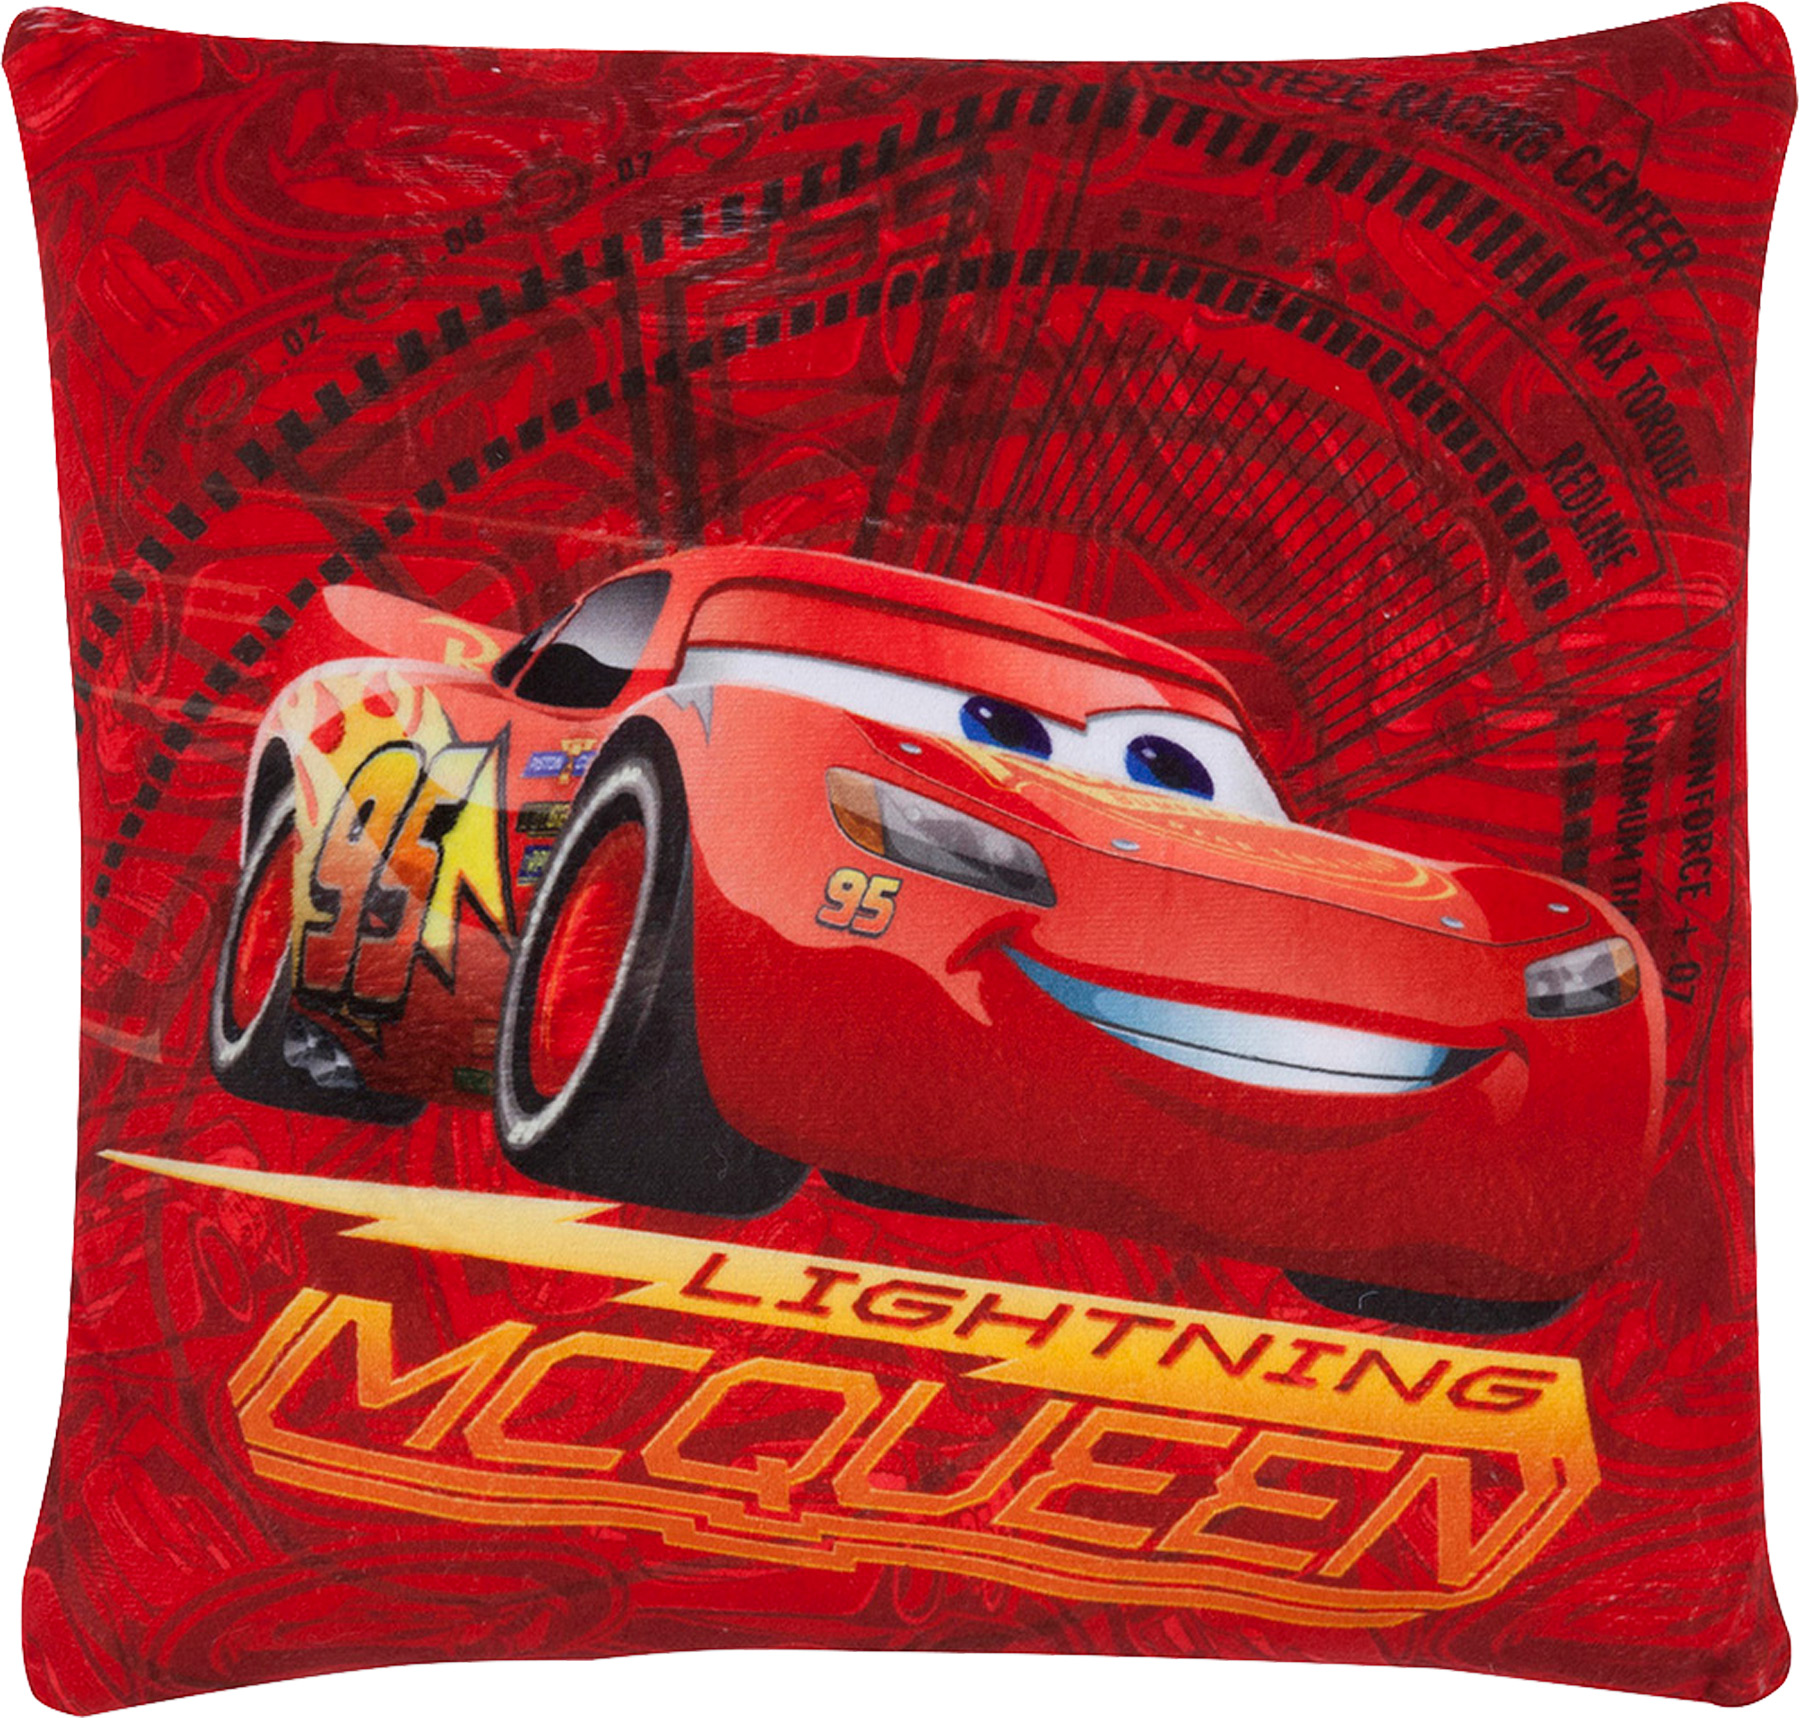 Disney Cars Lightning McQueen Pillow - Pillows - Import for Kids ApS